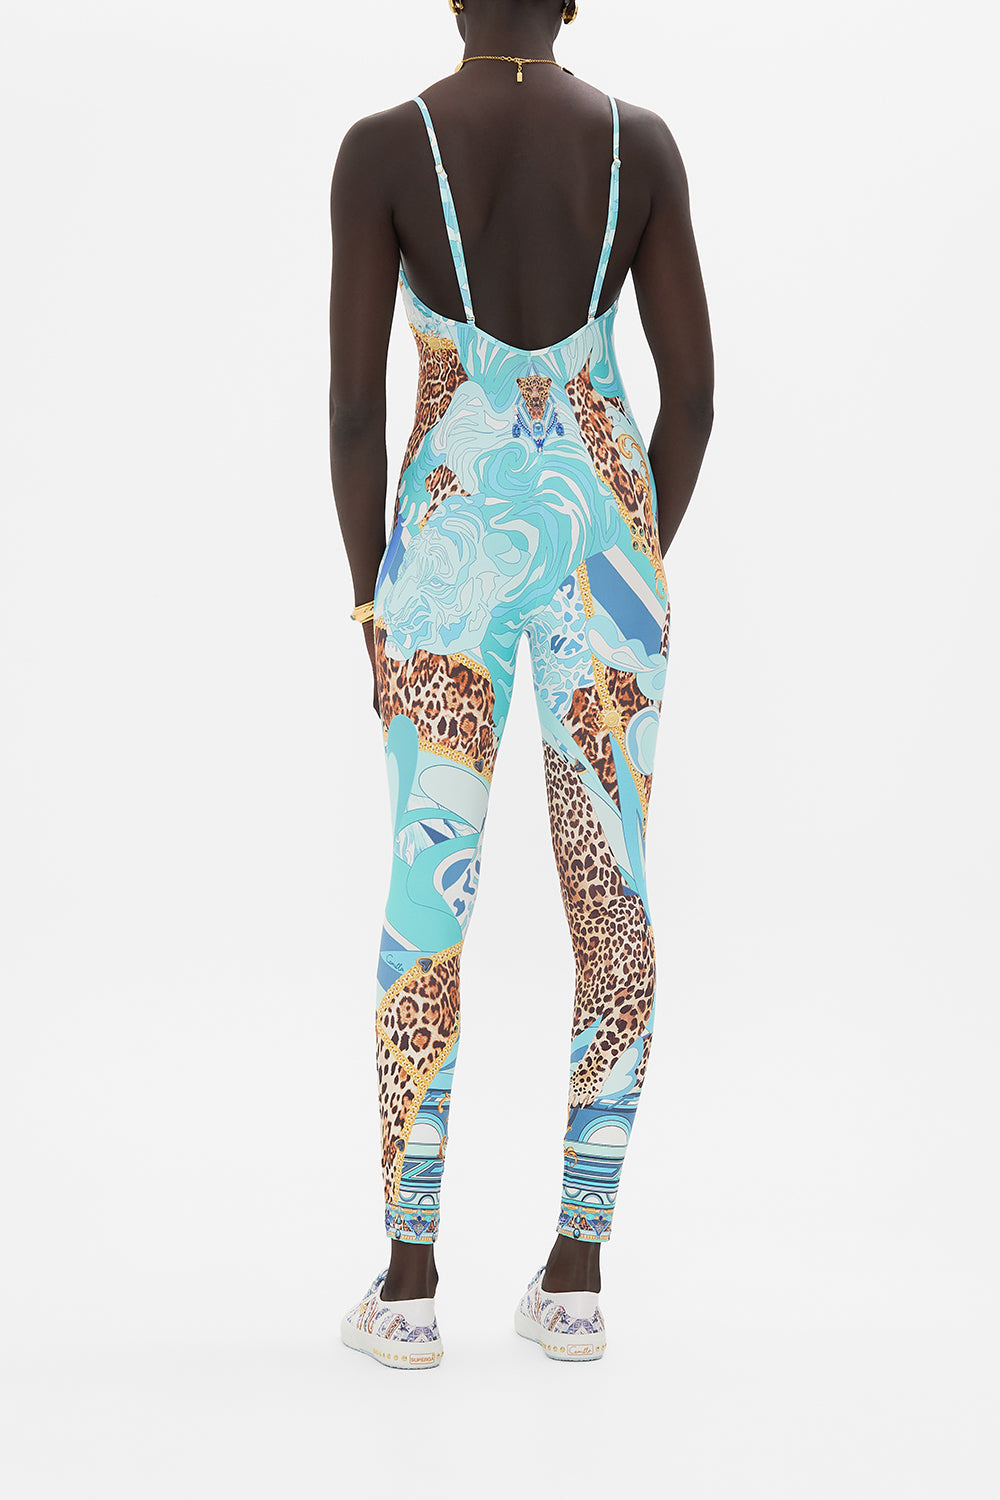 Back view of model wearing CAMILLA designer catsuit in Sky Cheetah print